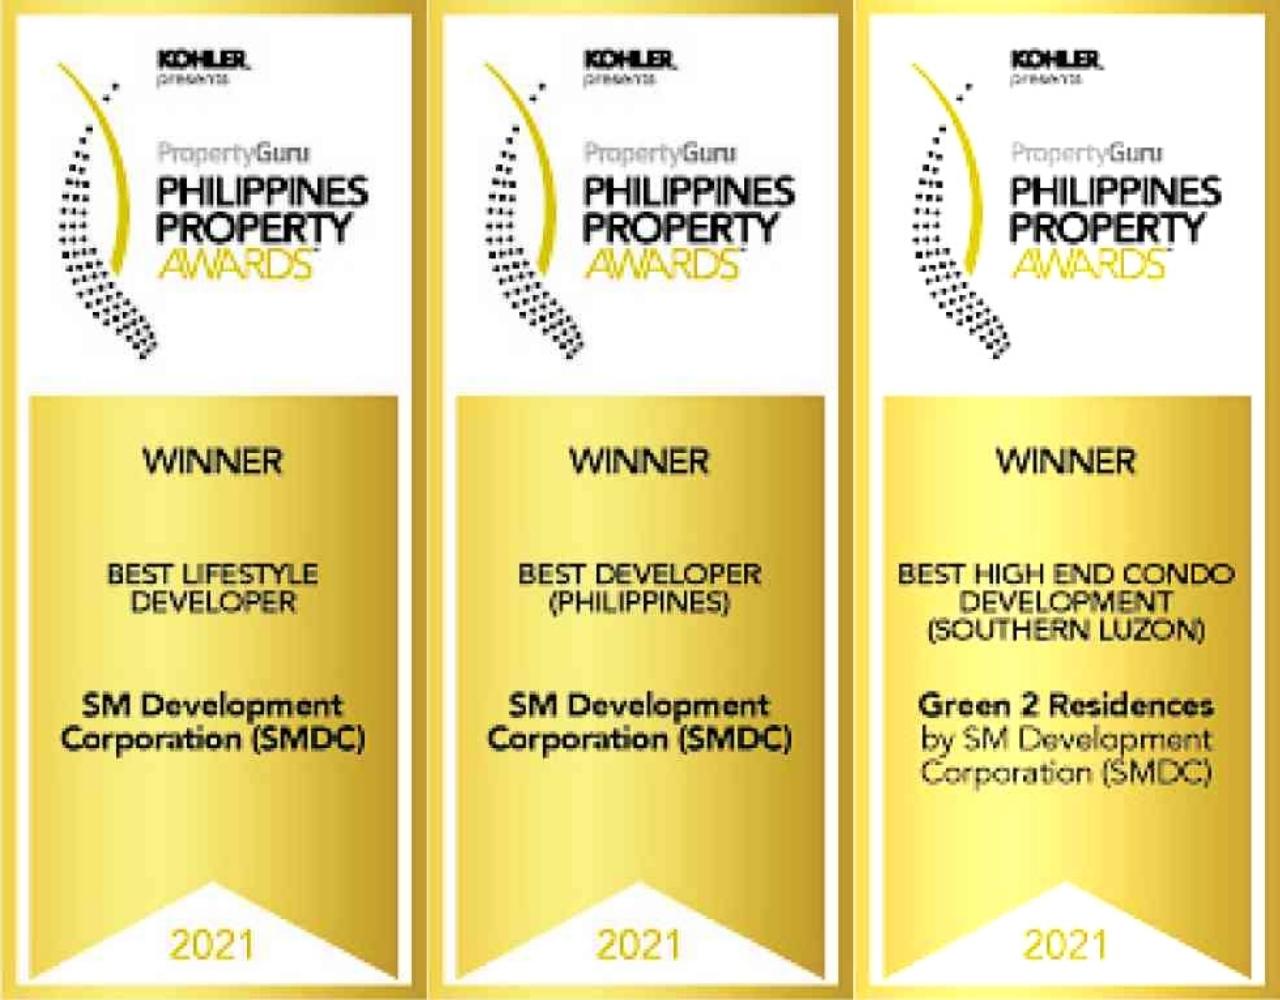 Award for Best Lifestyle Developer; Award for Best Developer (Philippines); Award for Best High-End Condo Development (Southern Luzon)